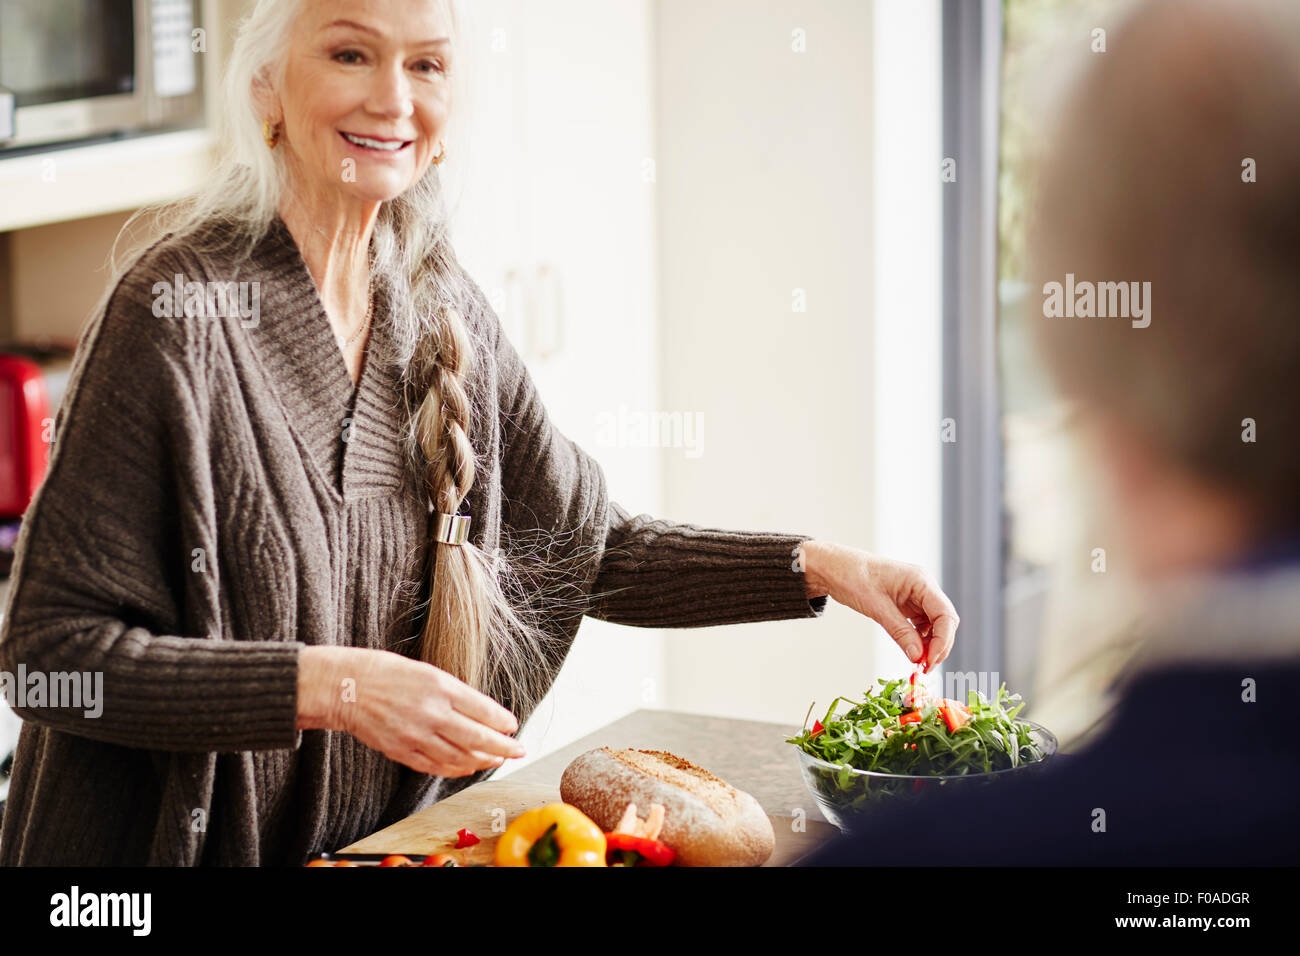 Senior woman preparing food in kitchen Stock Photo